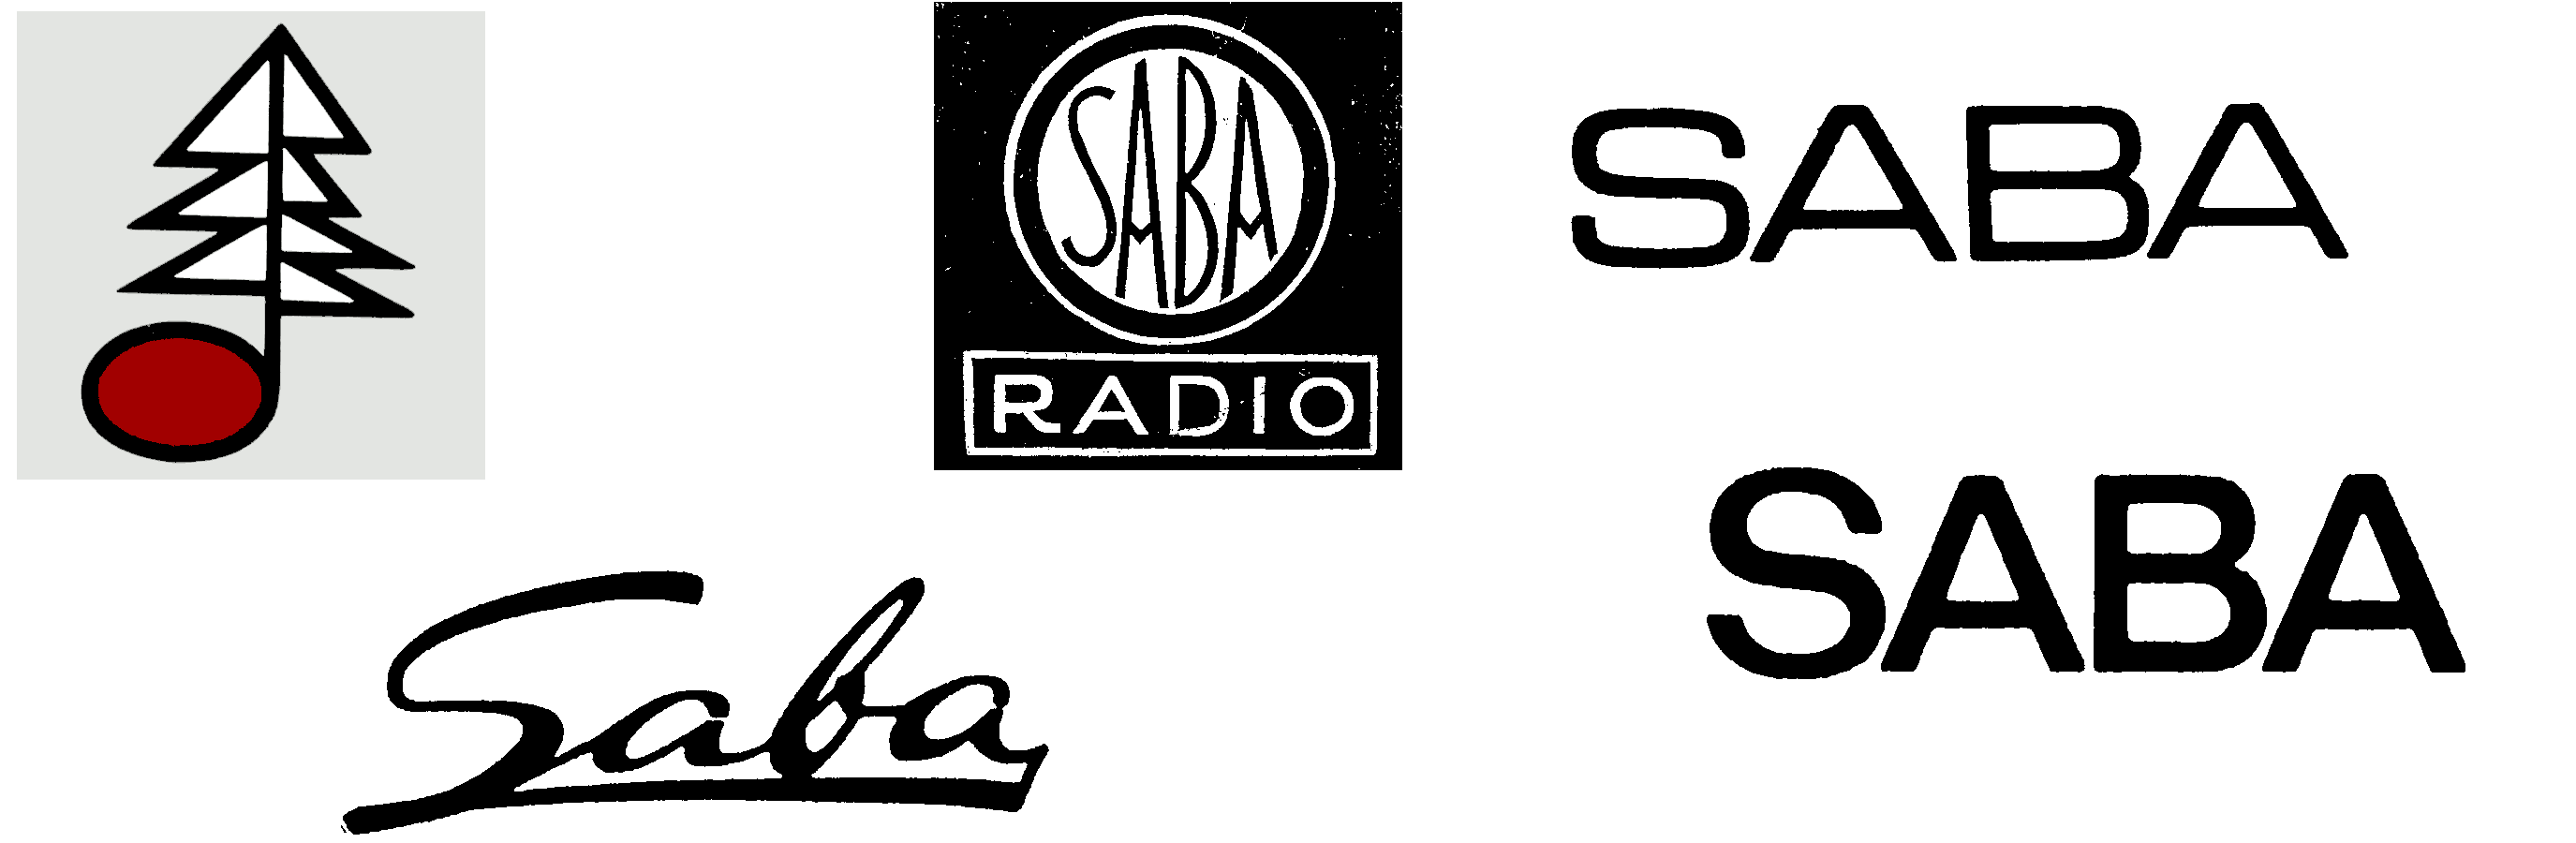 SABA Logos 1